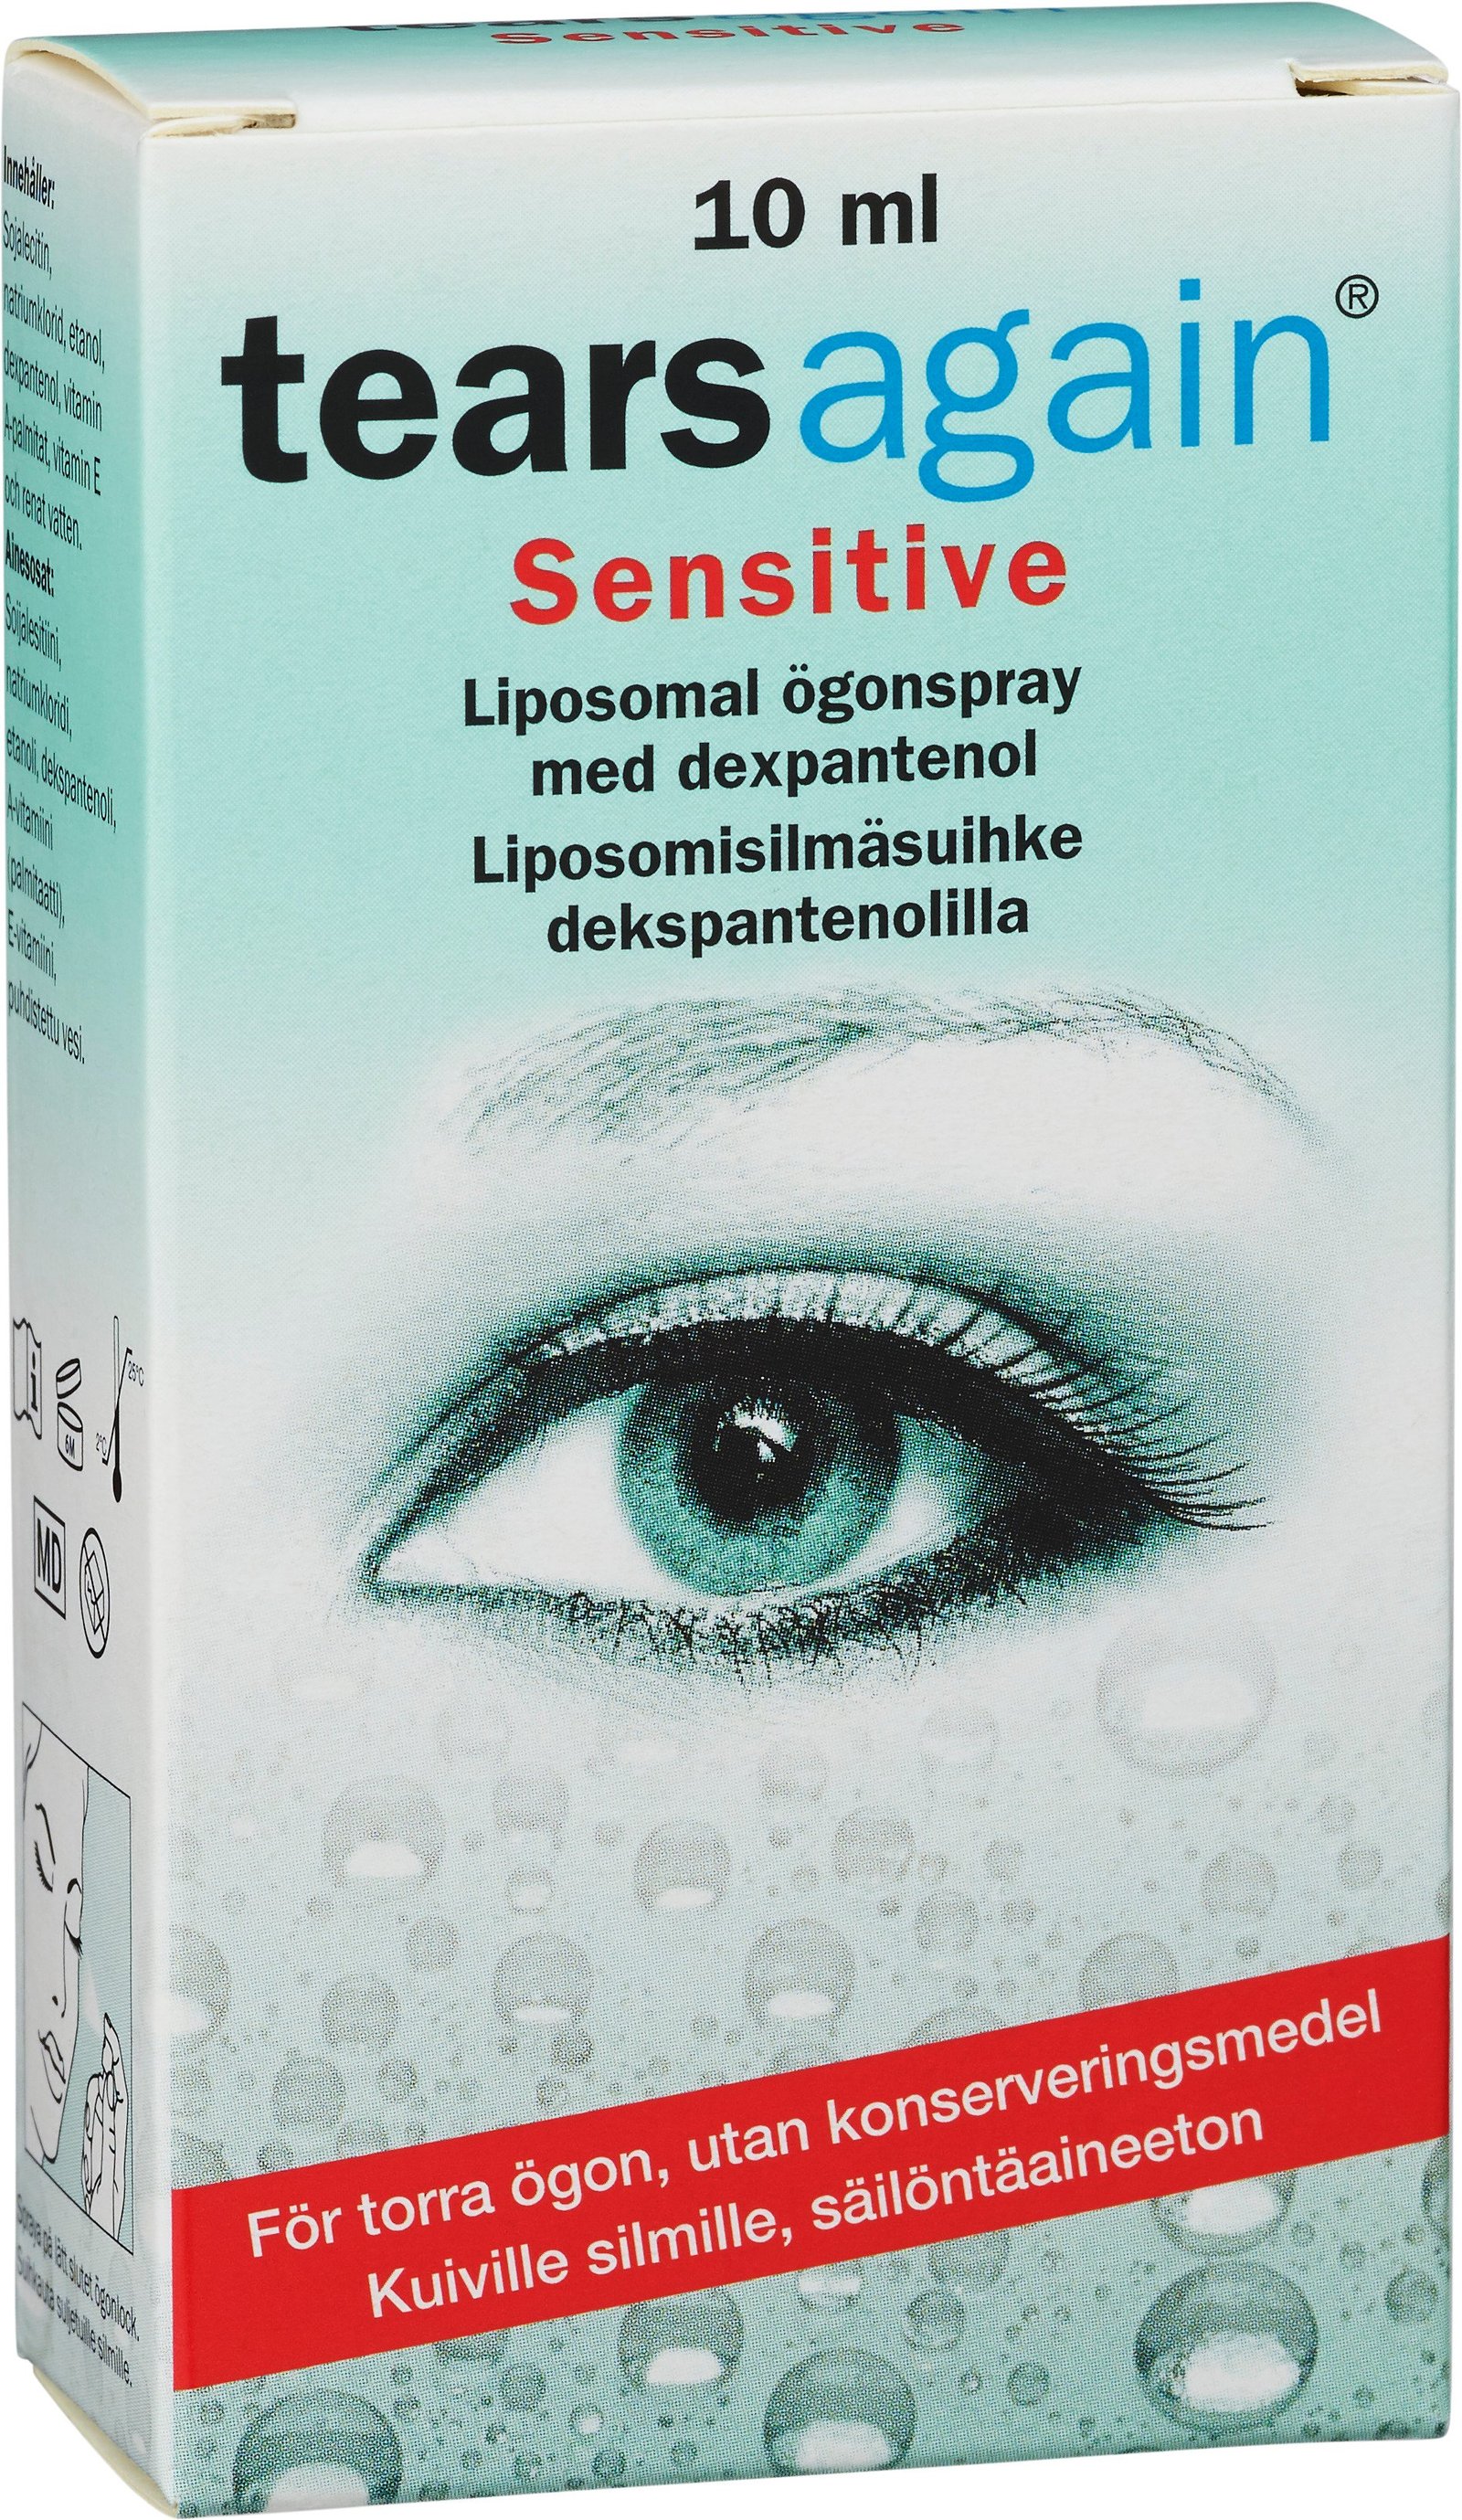 Tearsagain Sensitive Liposomal Ögonspray 10 ml